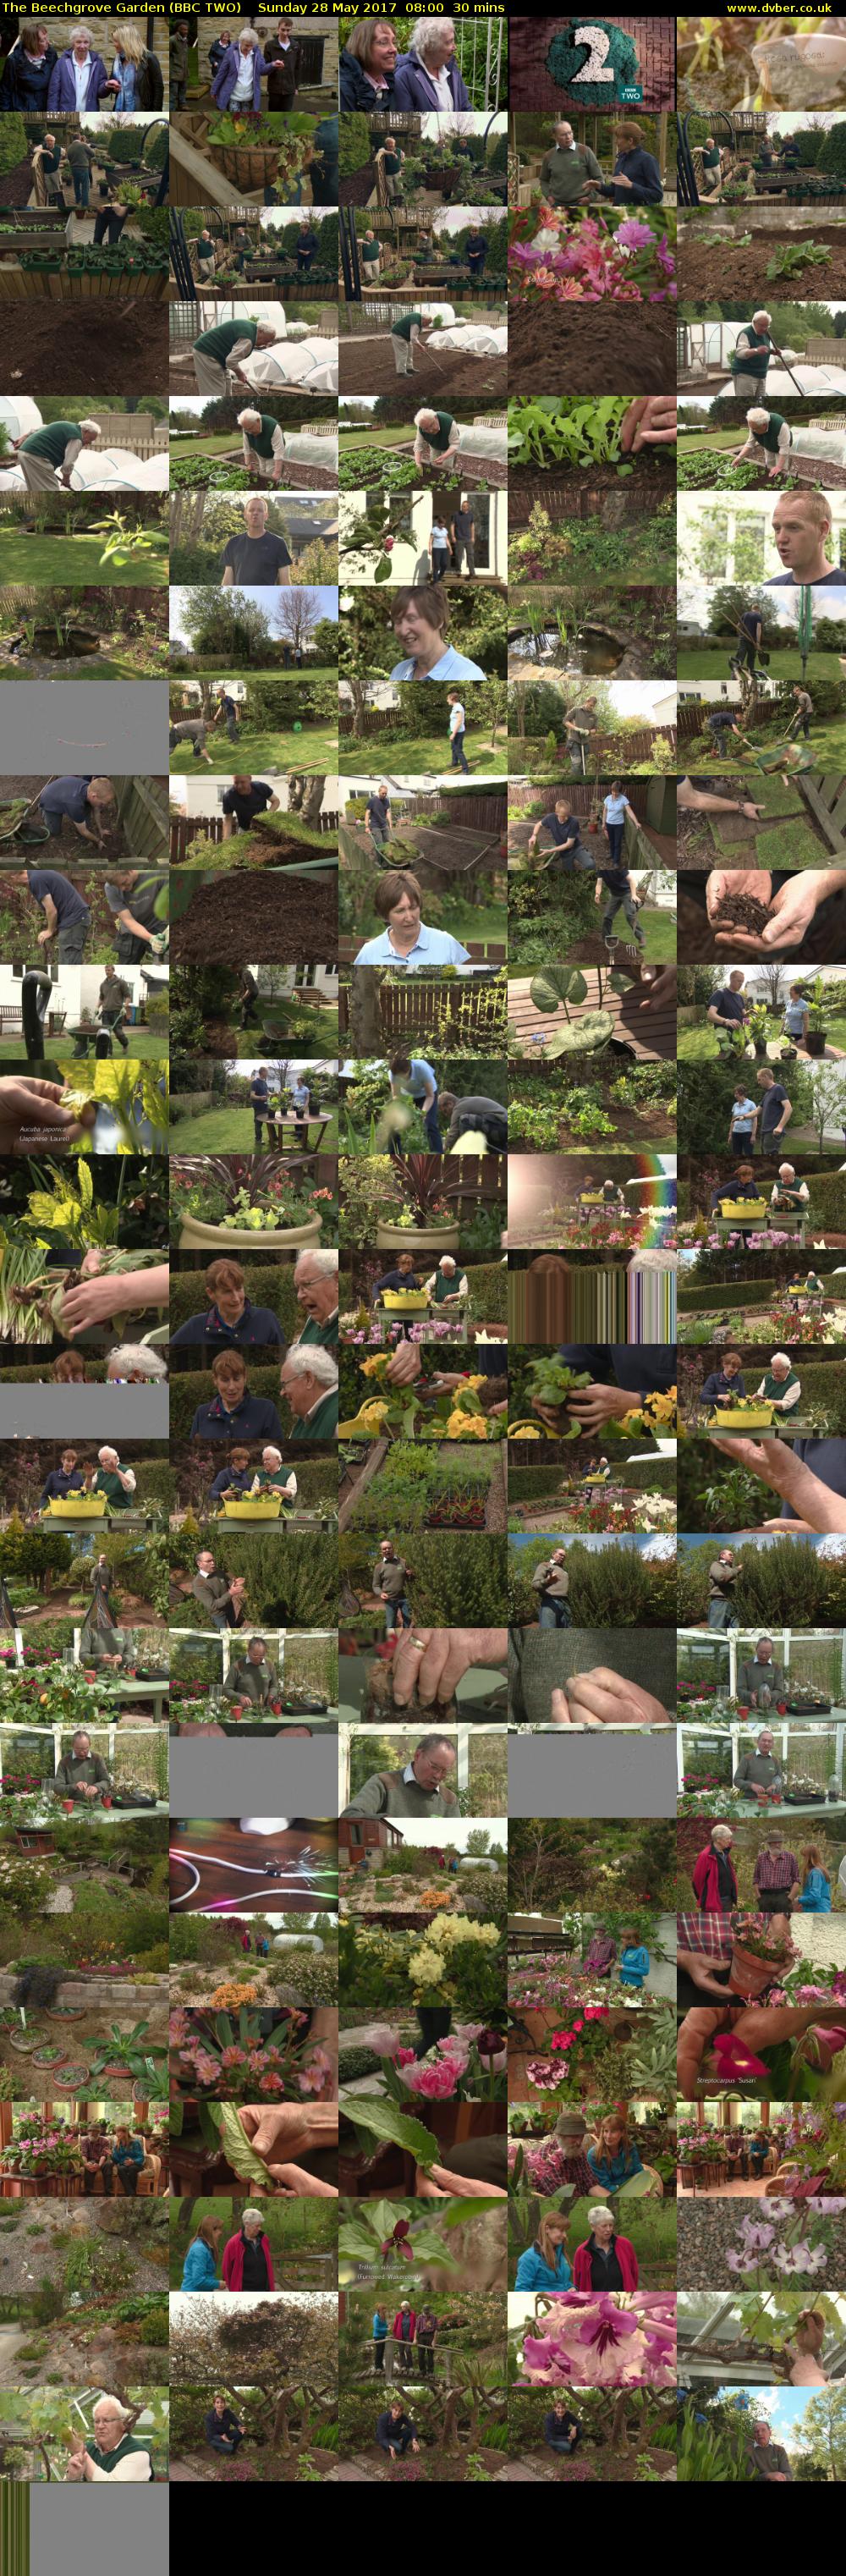 The Beechgrove Garden (BBC TWO) Sunday 28 May 2017 08:00 - 08:30